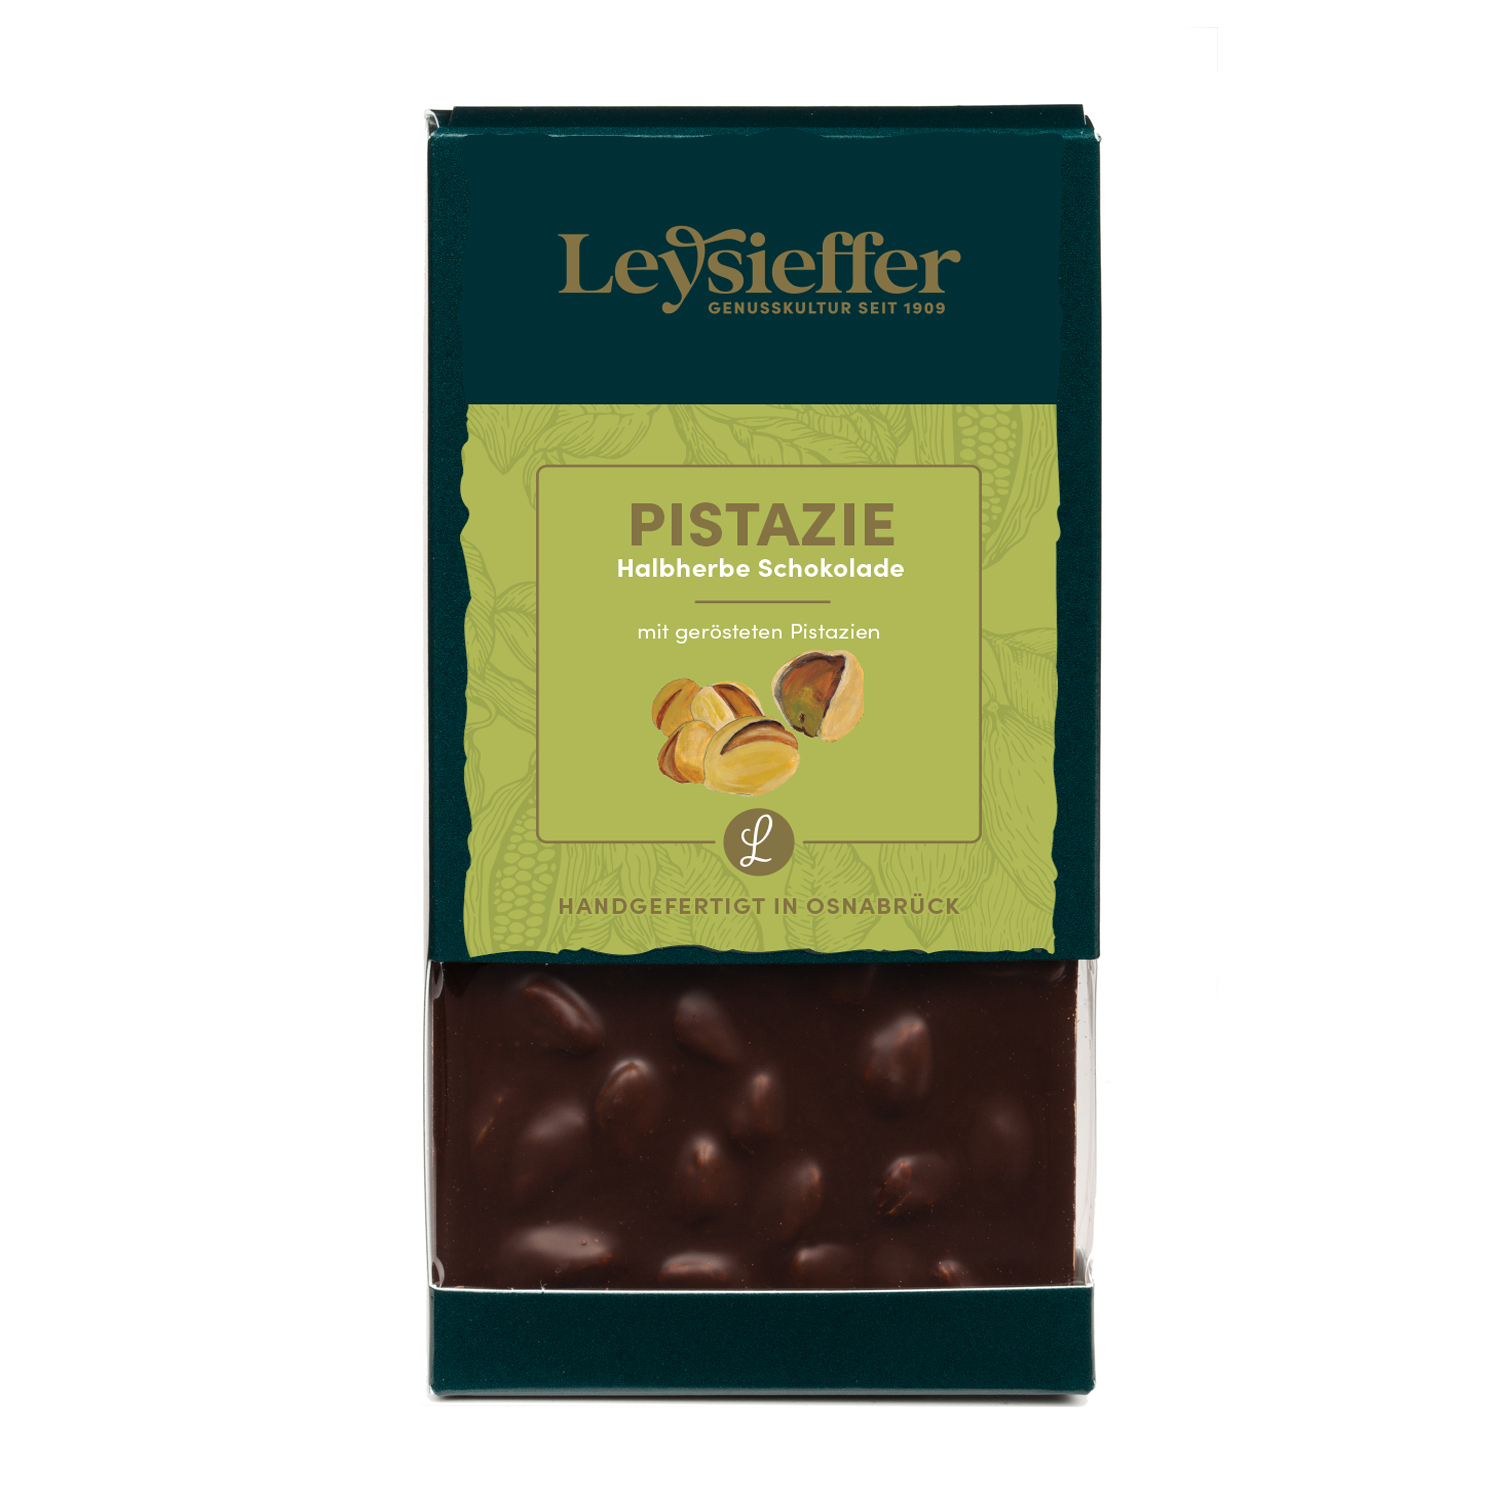 Halbherbe Schokolade mit gerösteten Pistazien